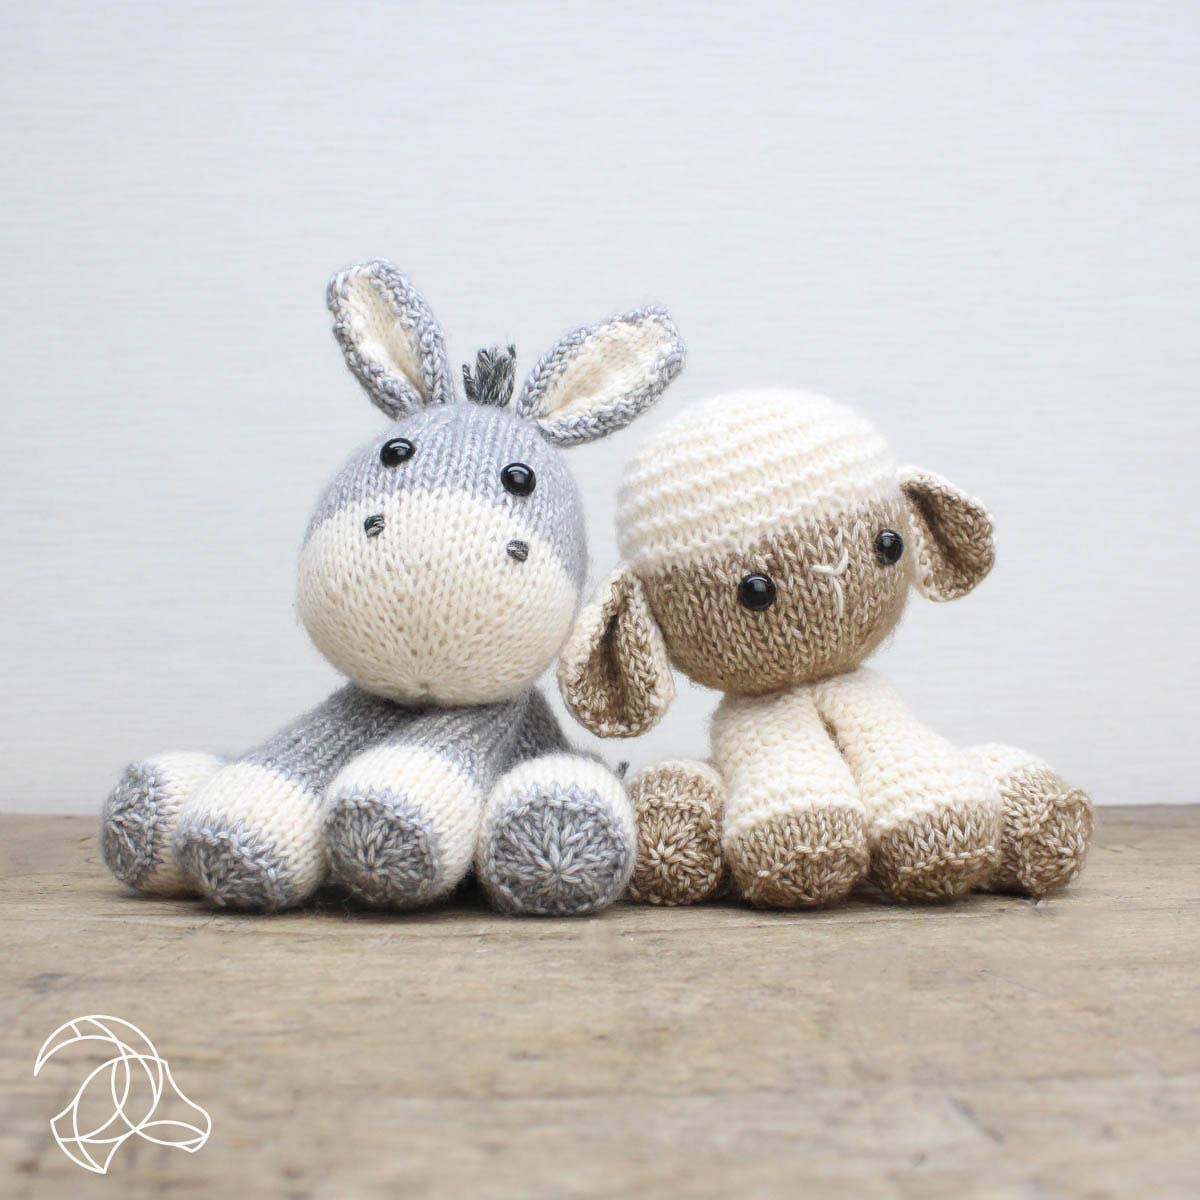 Hardicraft - Spring Donkey - Knitting Kit